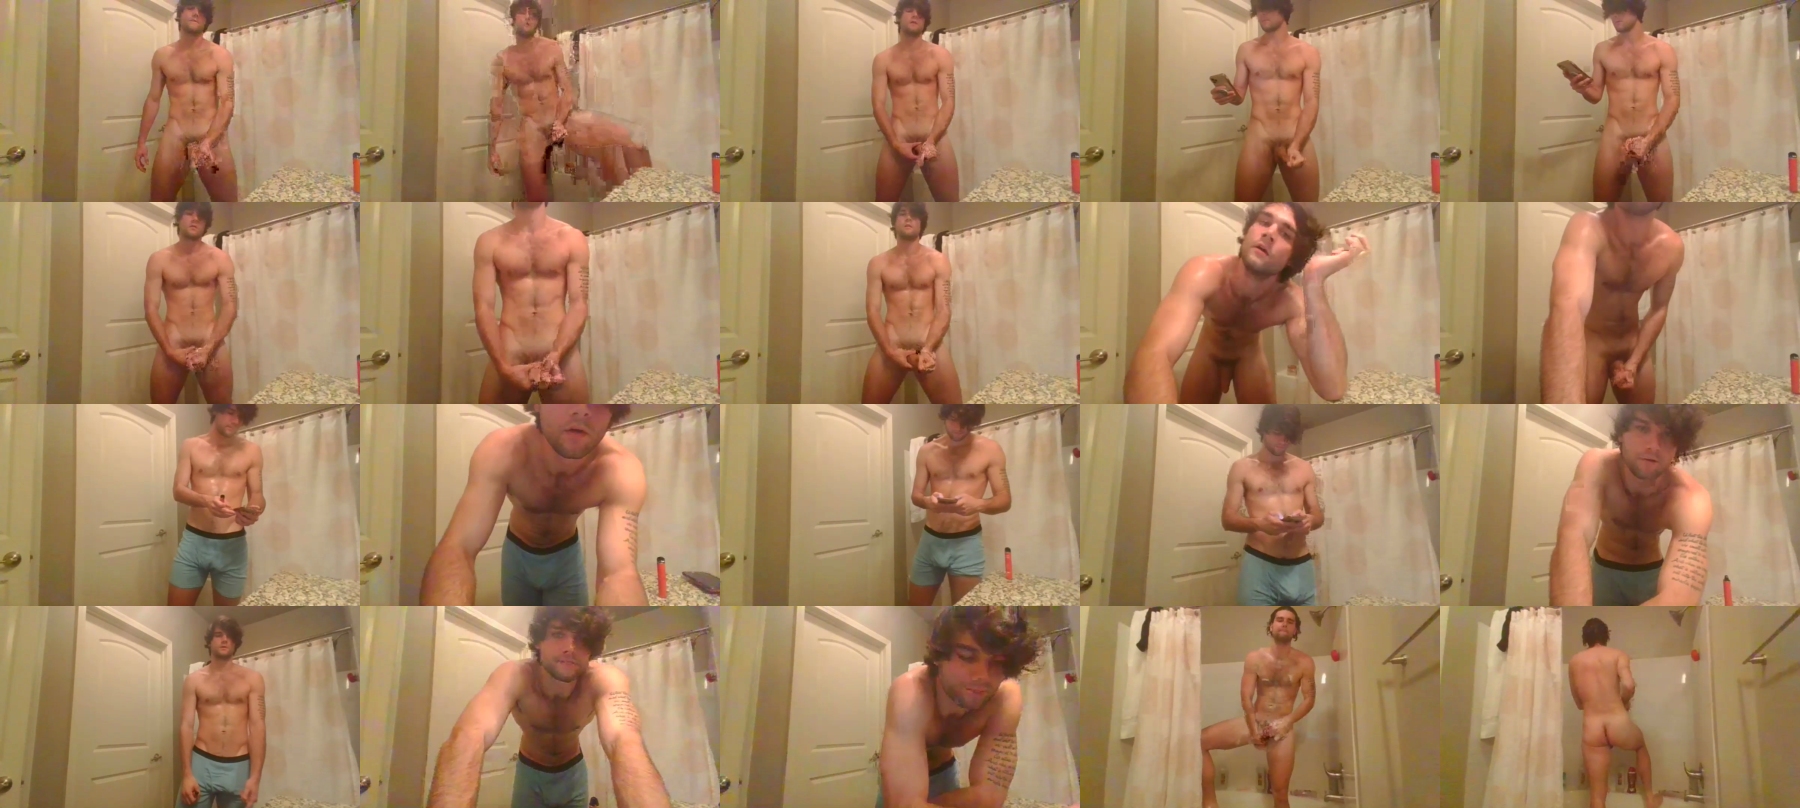 Brooksjohnson1  28-10-2021 Male Topless